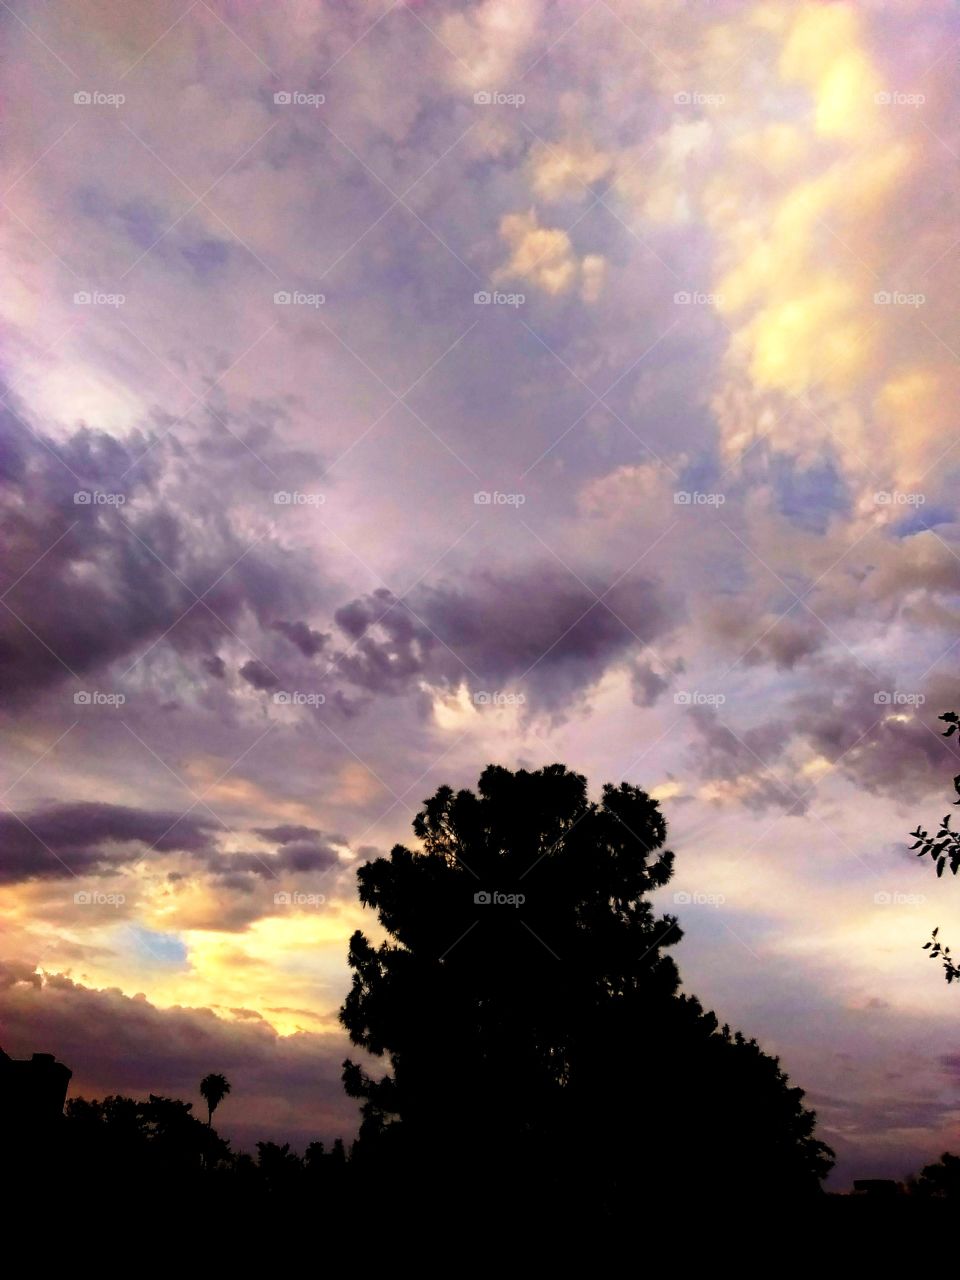 Arizona sunset storm